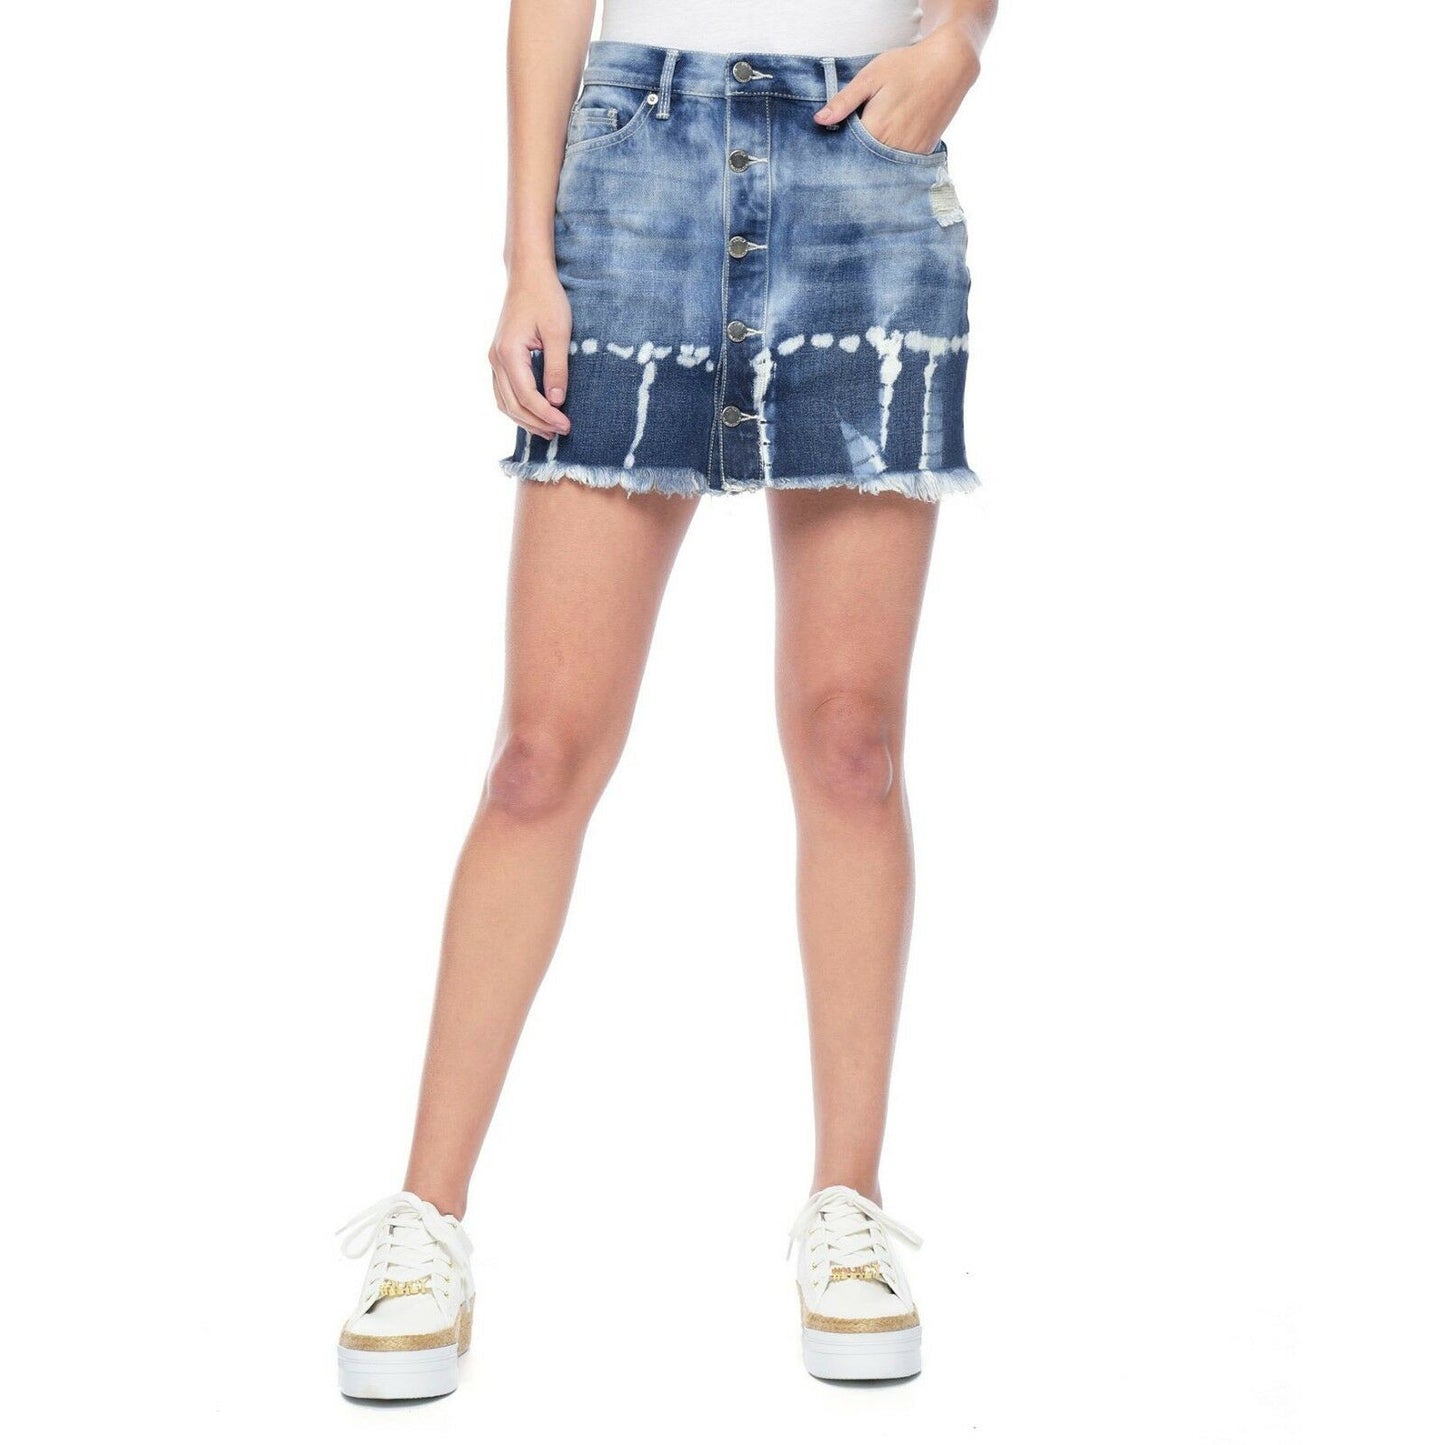 Juicy Couture Black Label Bleach Blonde Tye Dye Denim Jean Mini Skirt 27 NWT